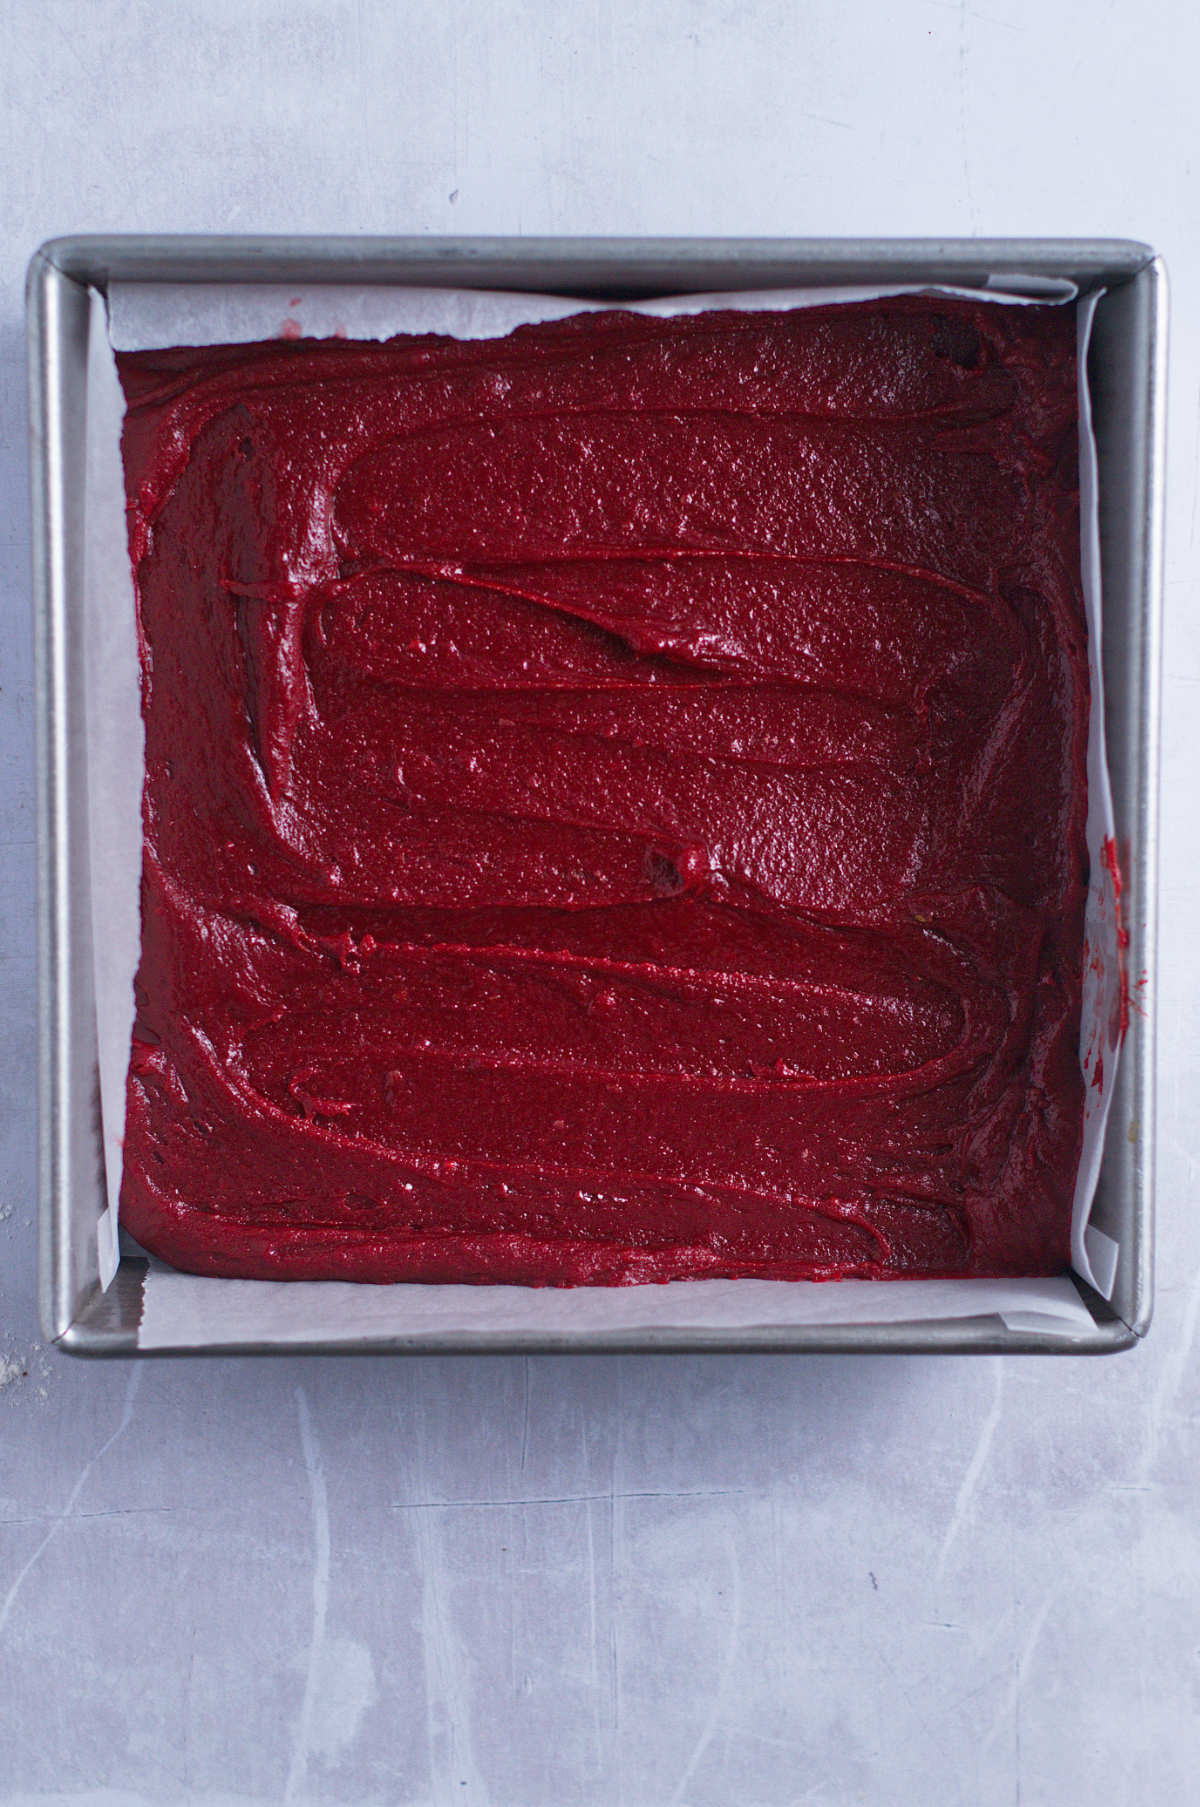 red velvet brownie batter in a baking pan